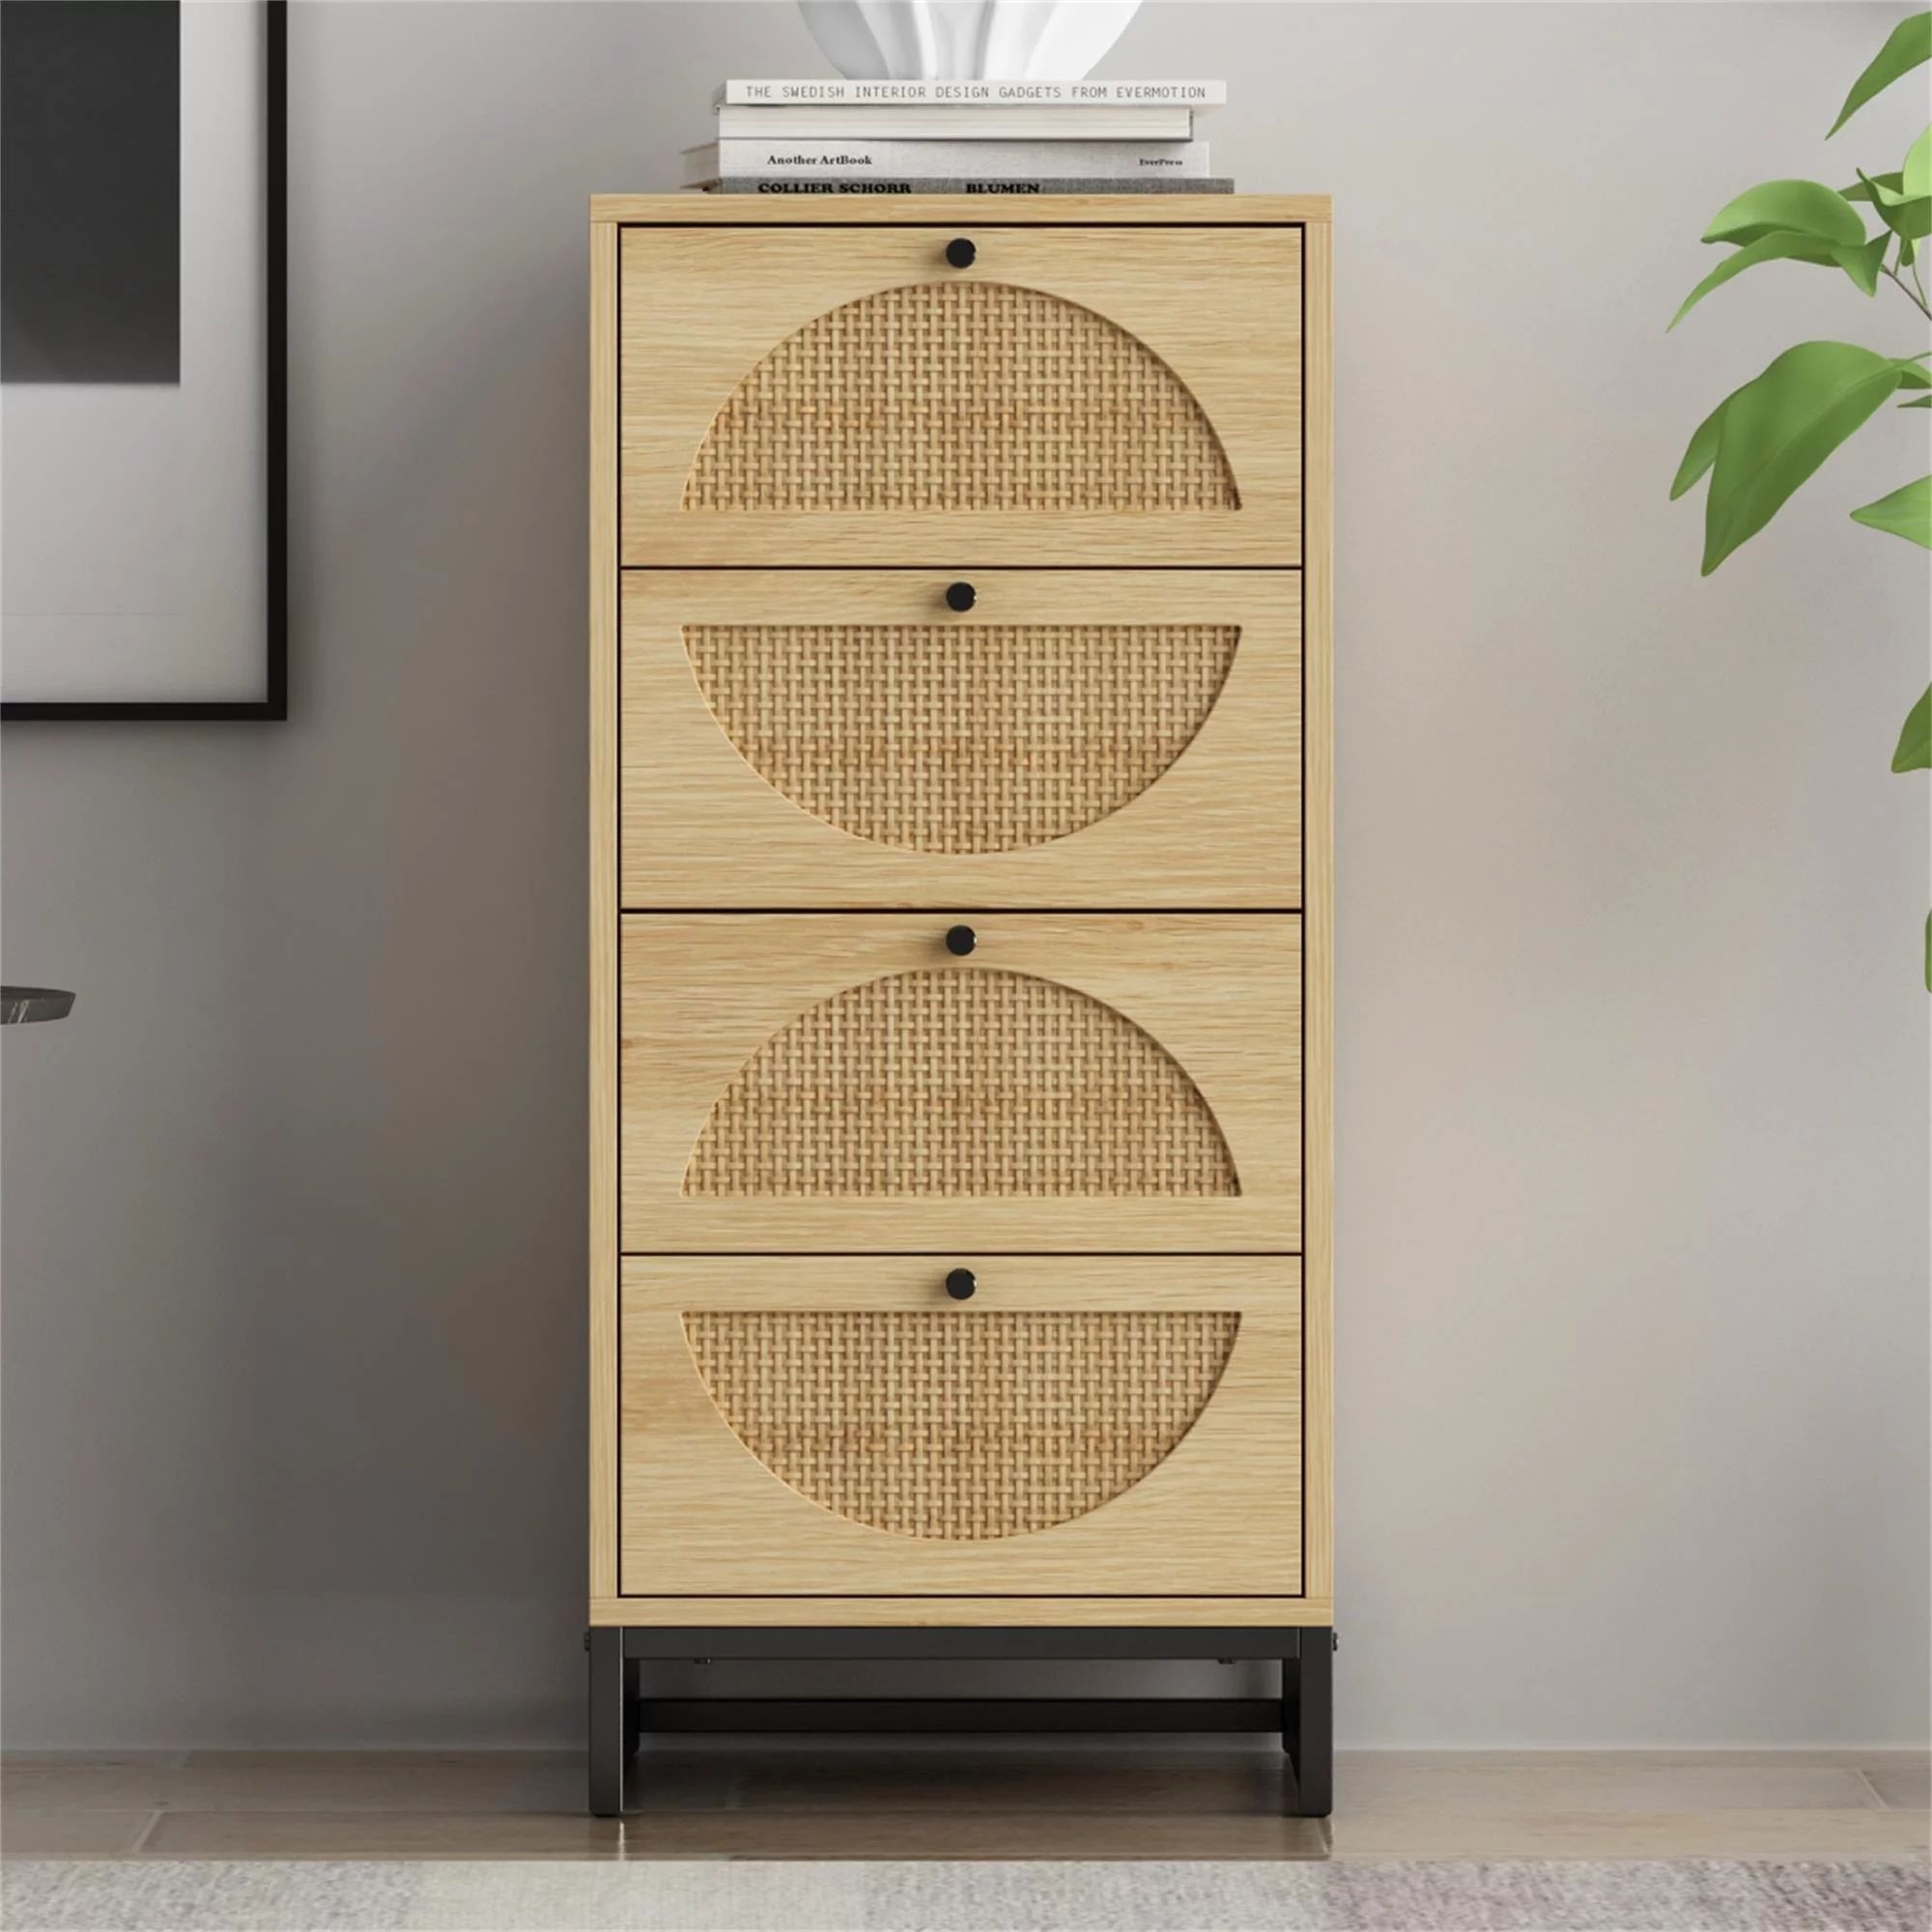 Resenkos Natural Rattans 4-Drawer Dresser for Bedroom Diversified Storage Organizer | Walmart (US)